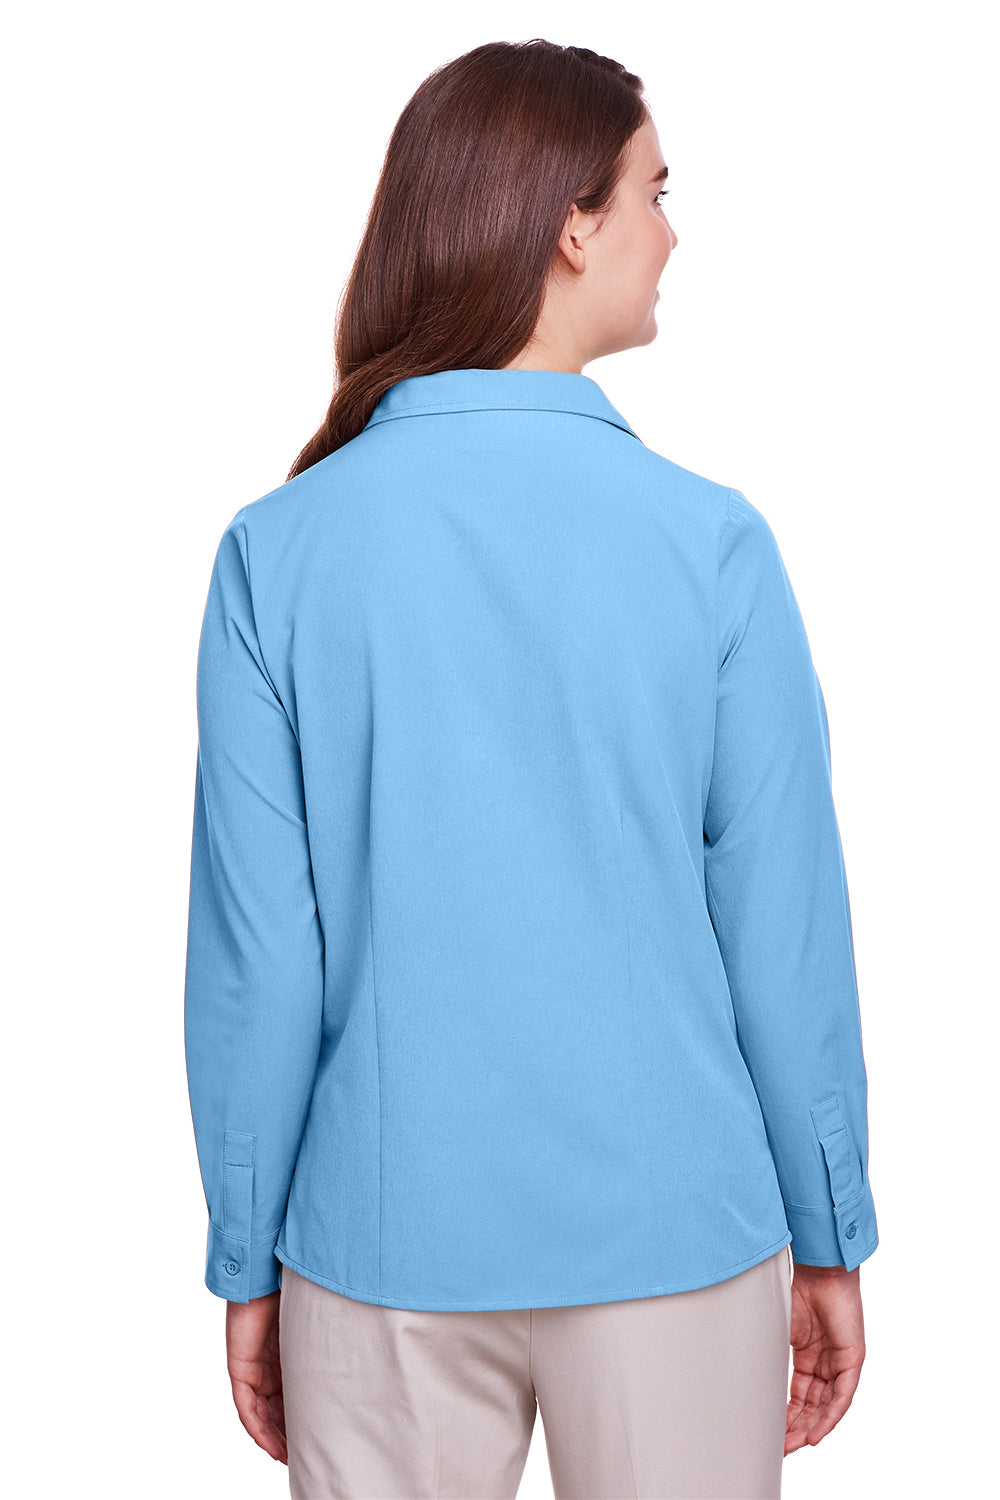 UltraClub UC500W Womens Bradley Performance Moisture Wicking Long Sleeve Button Down Shirt Columbia Blue Back